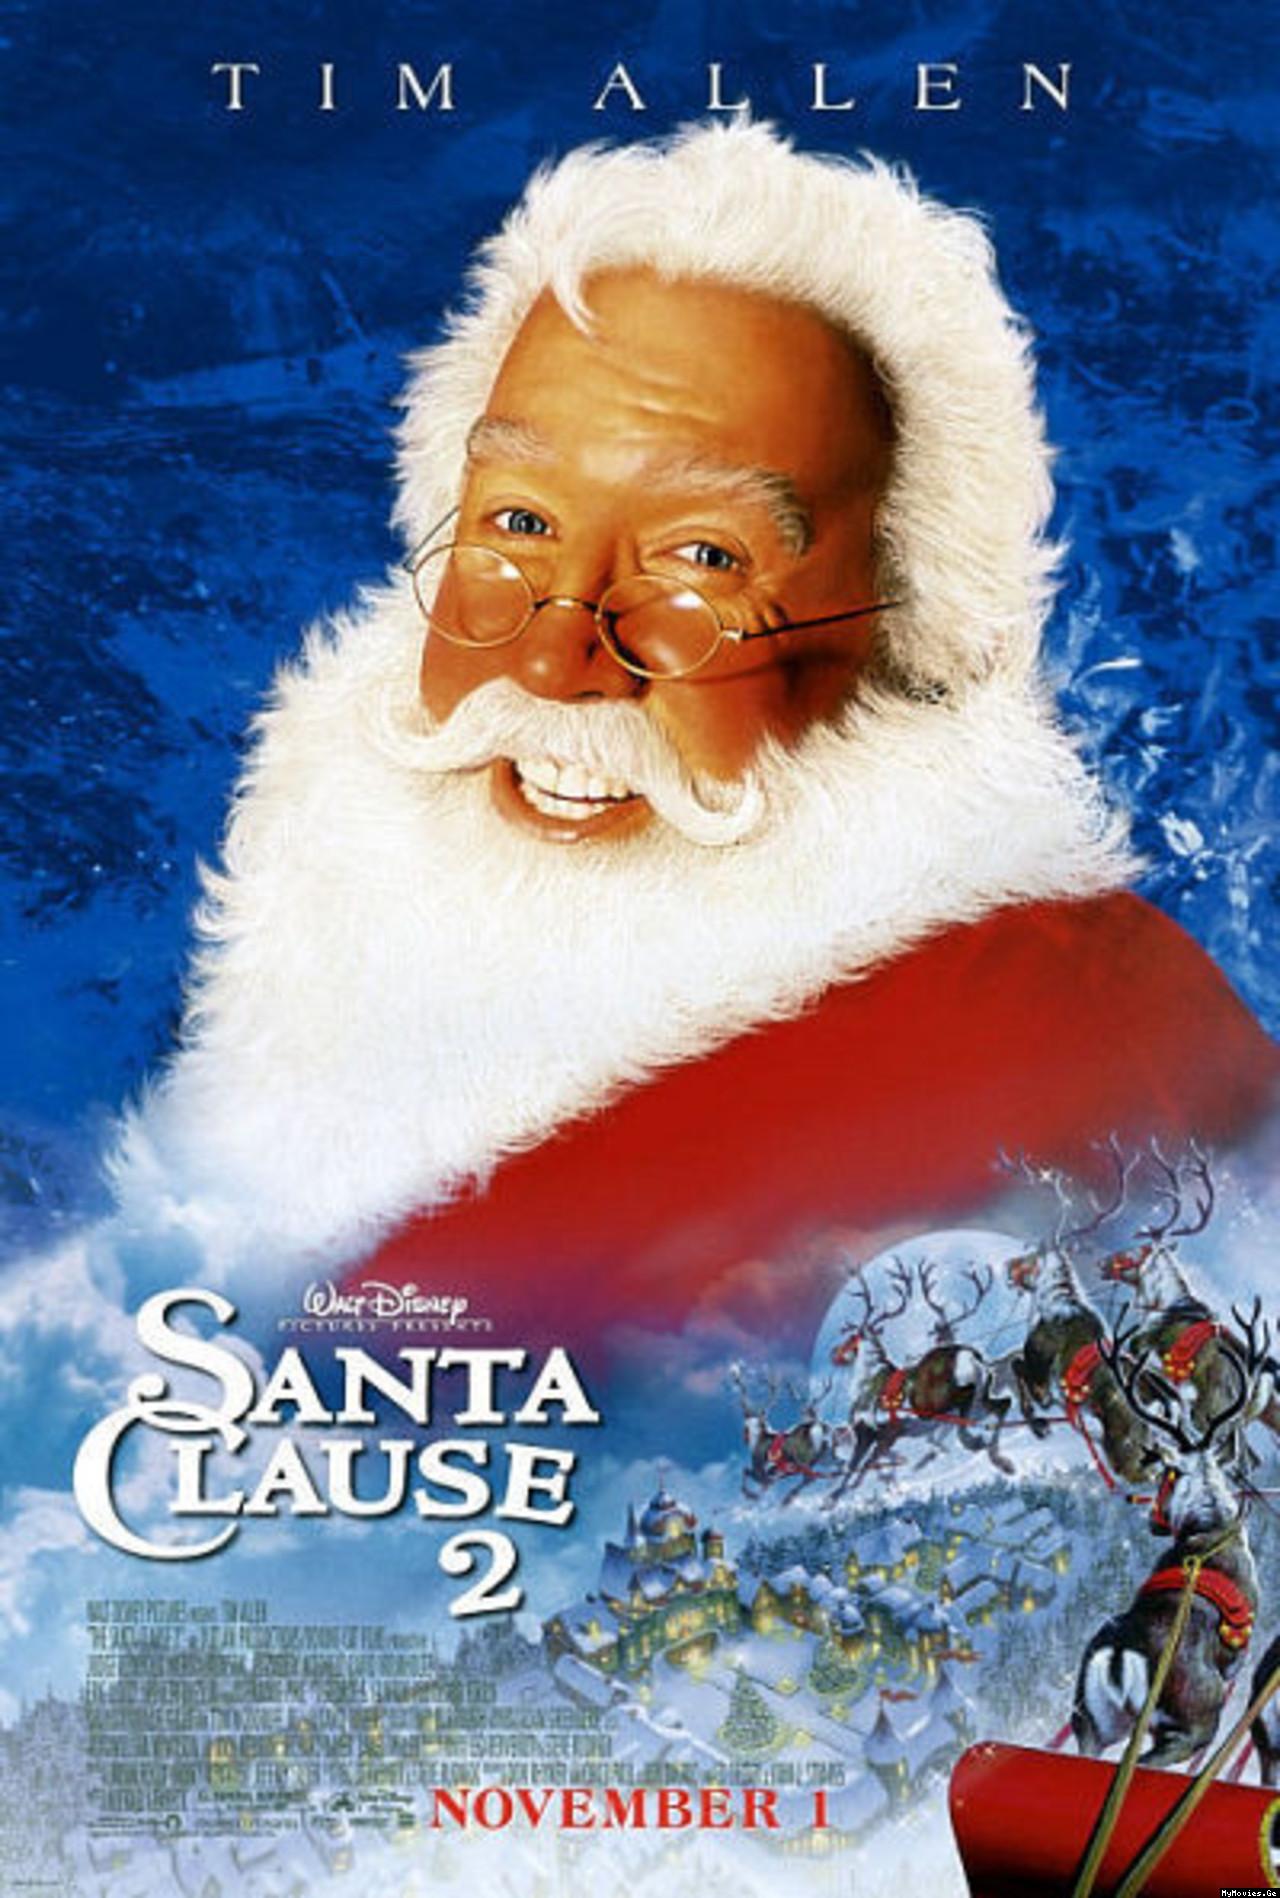 The Santa Clause Movies Image HD Wallpaper And